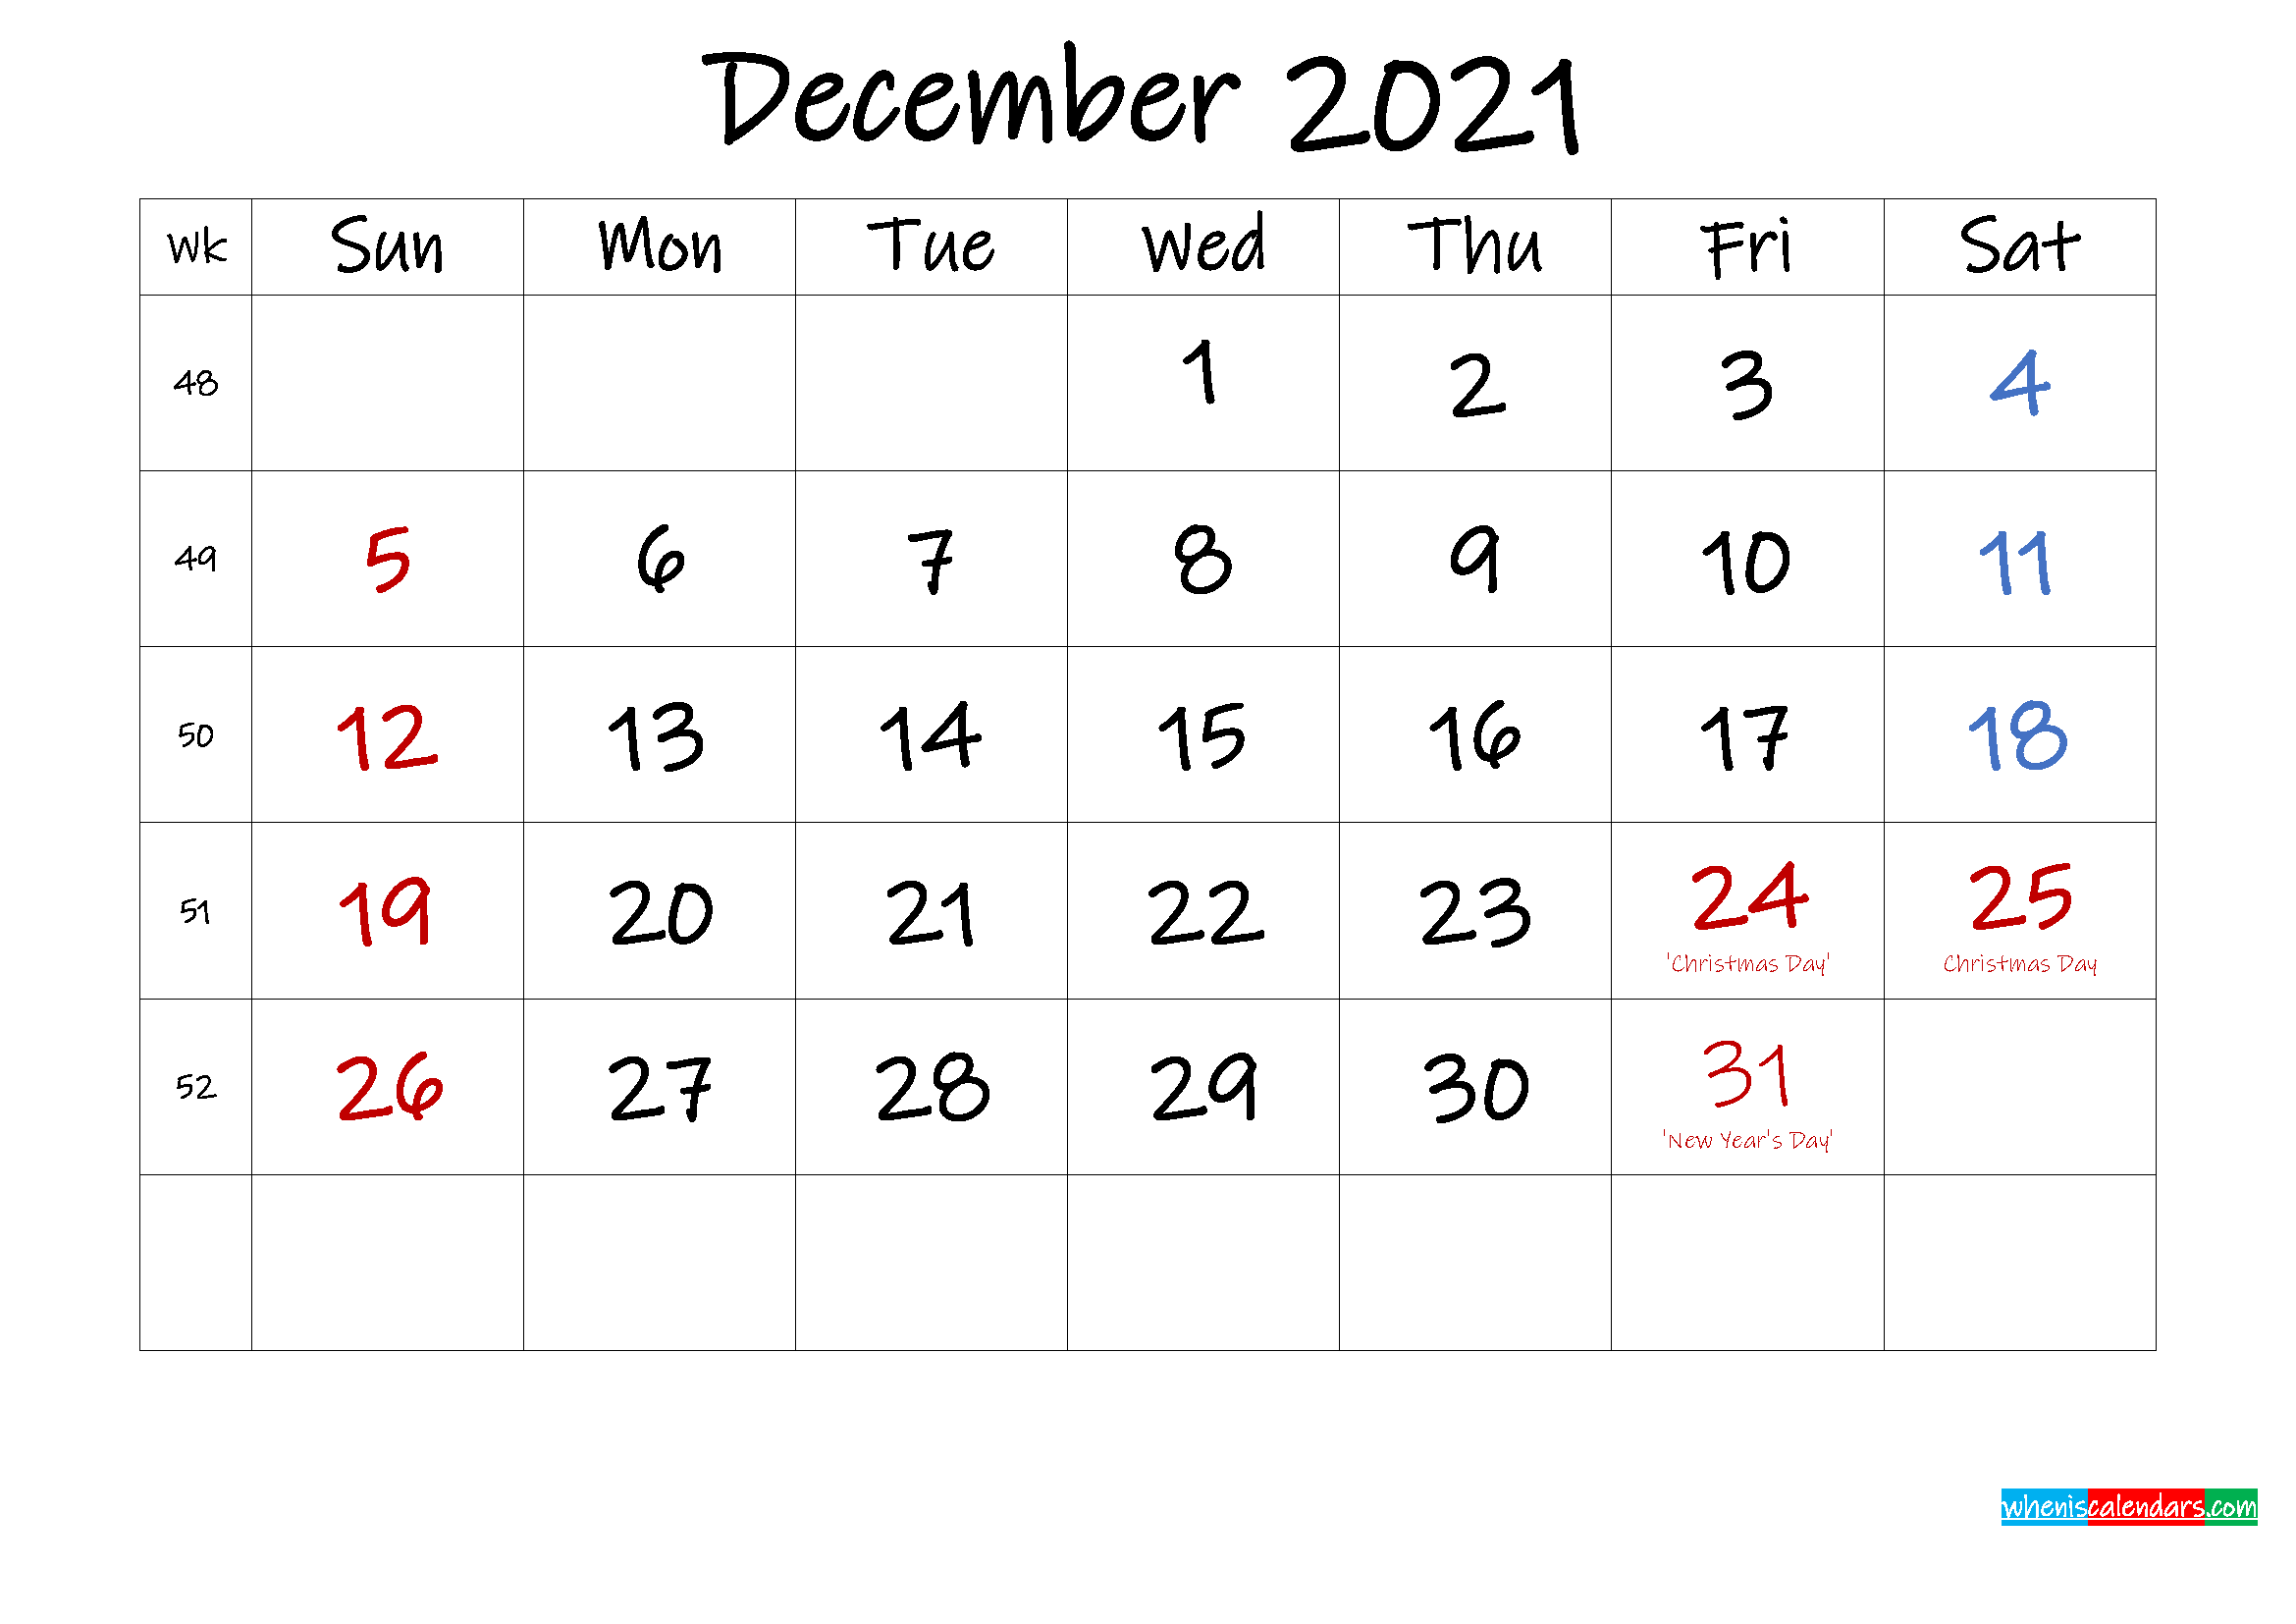 December 2021 Free Printable Calendar with Holidays ...